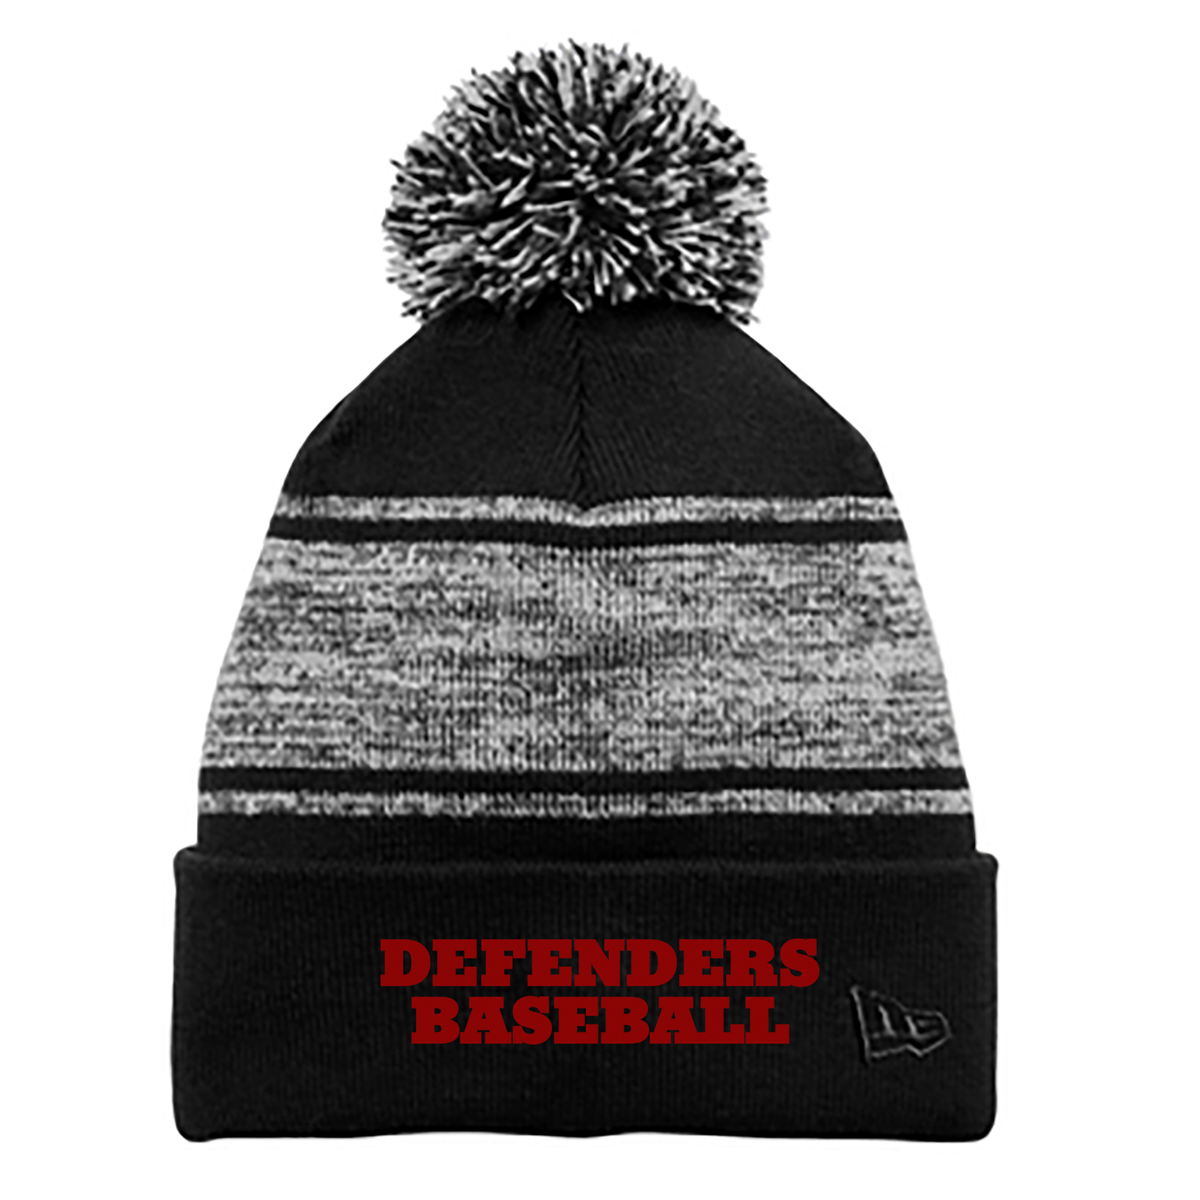 Defenders Baseball New Era Knit Chilled Pom Beanie